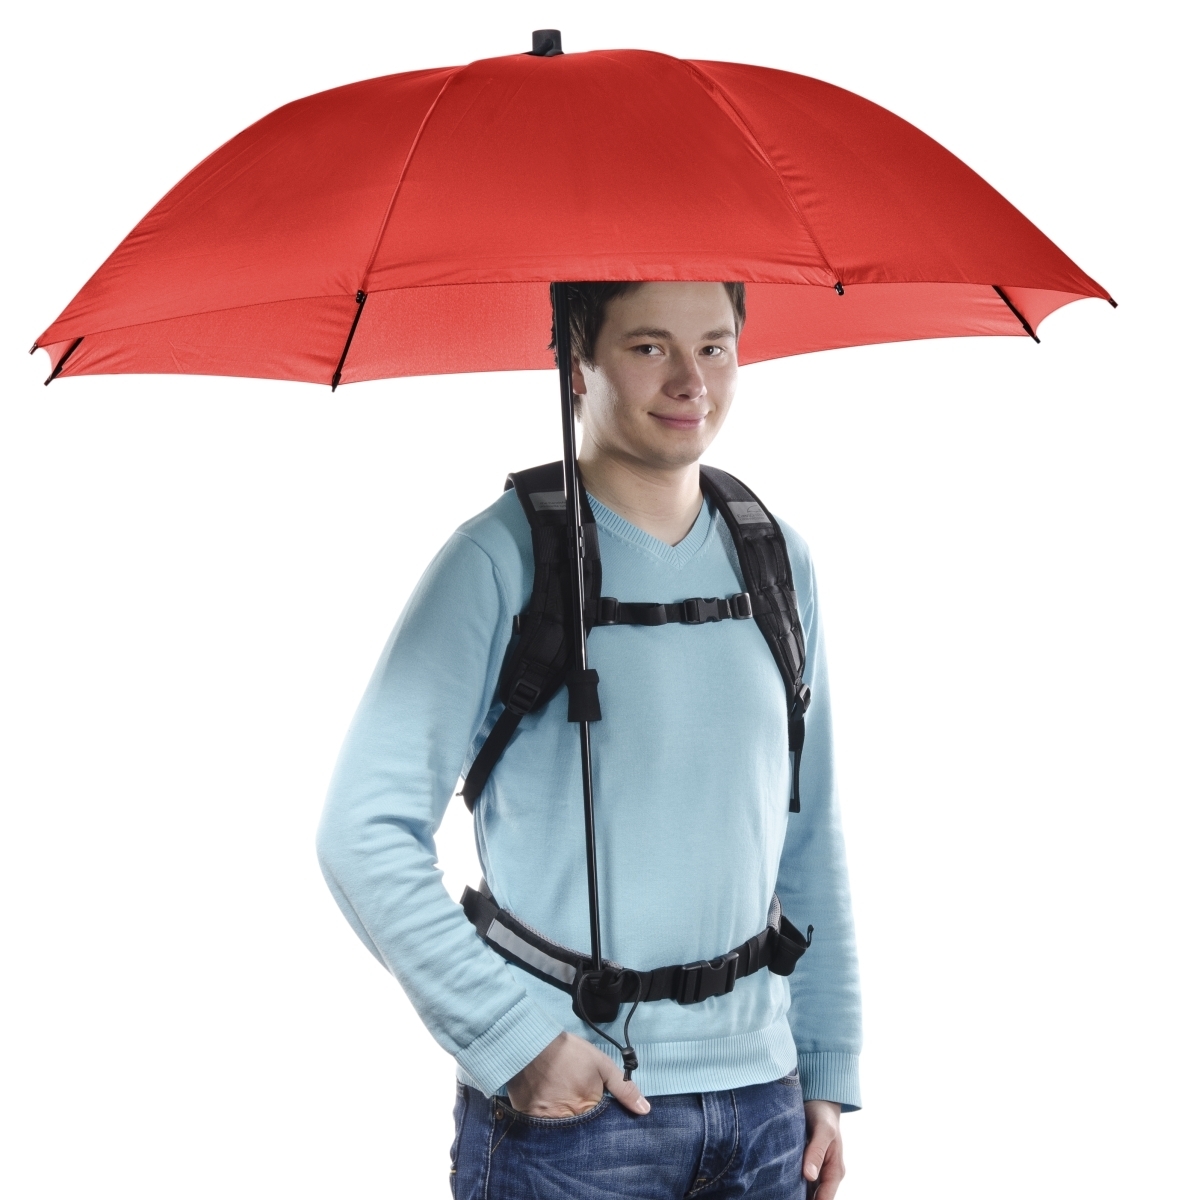 Swing handsfree Regenschirm rot mit Tragegestelll - walimex / walimex